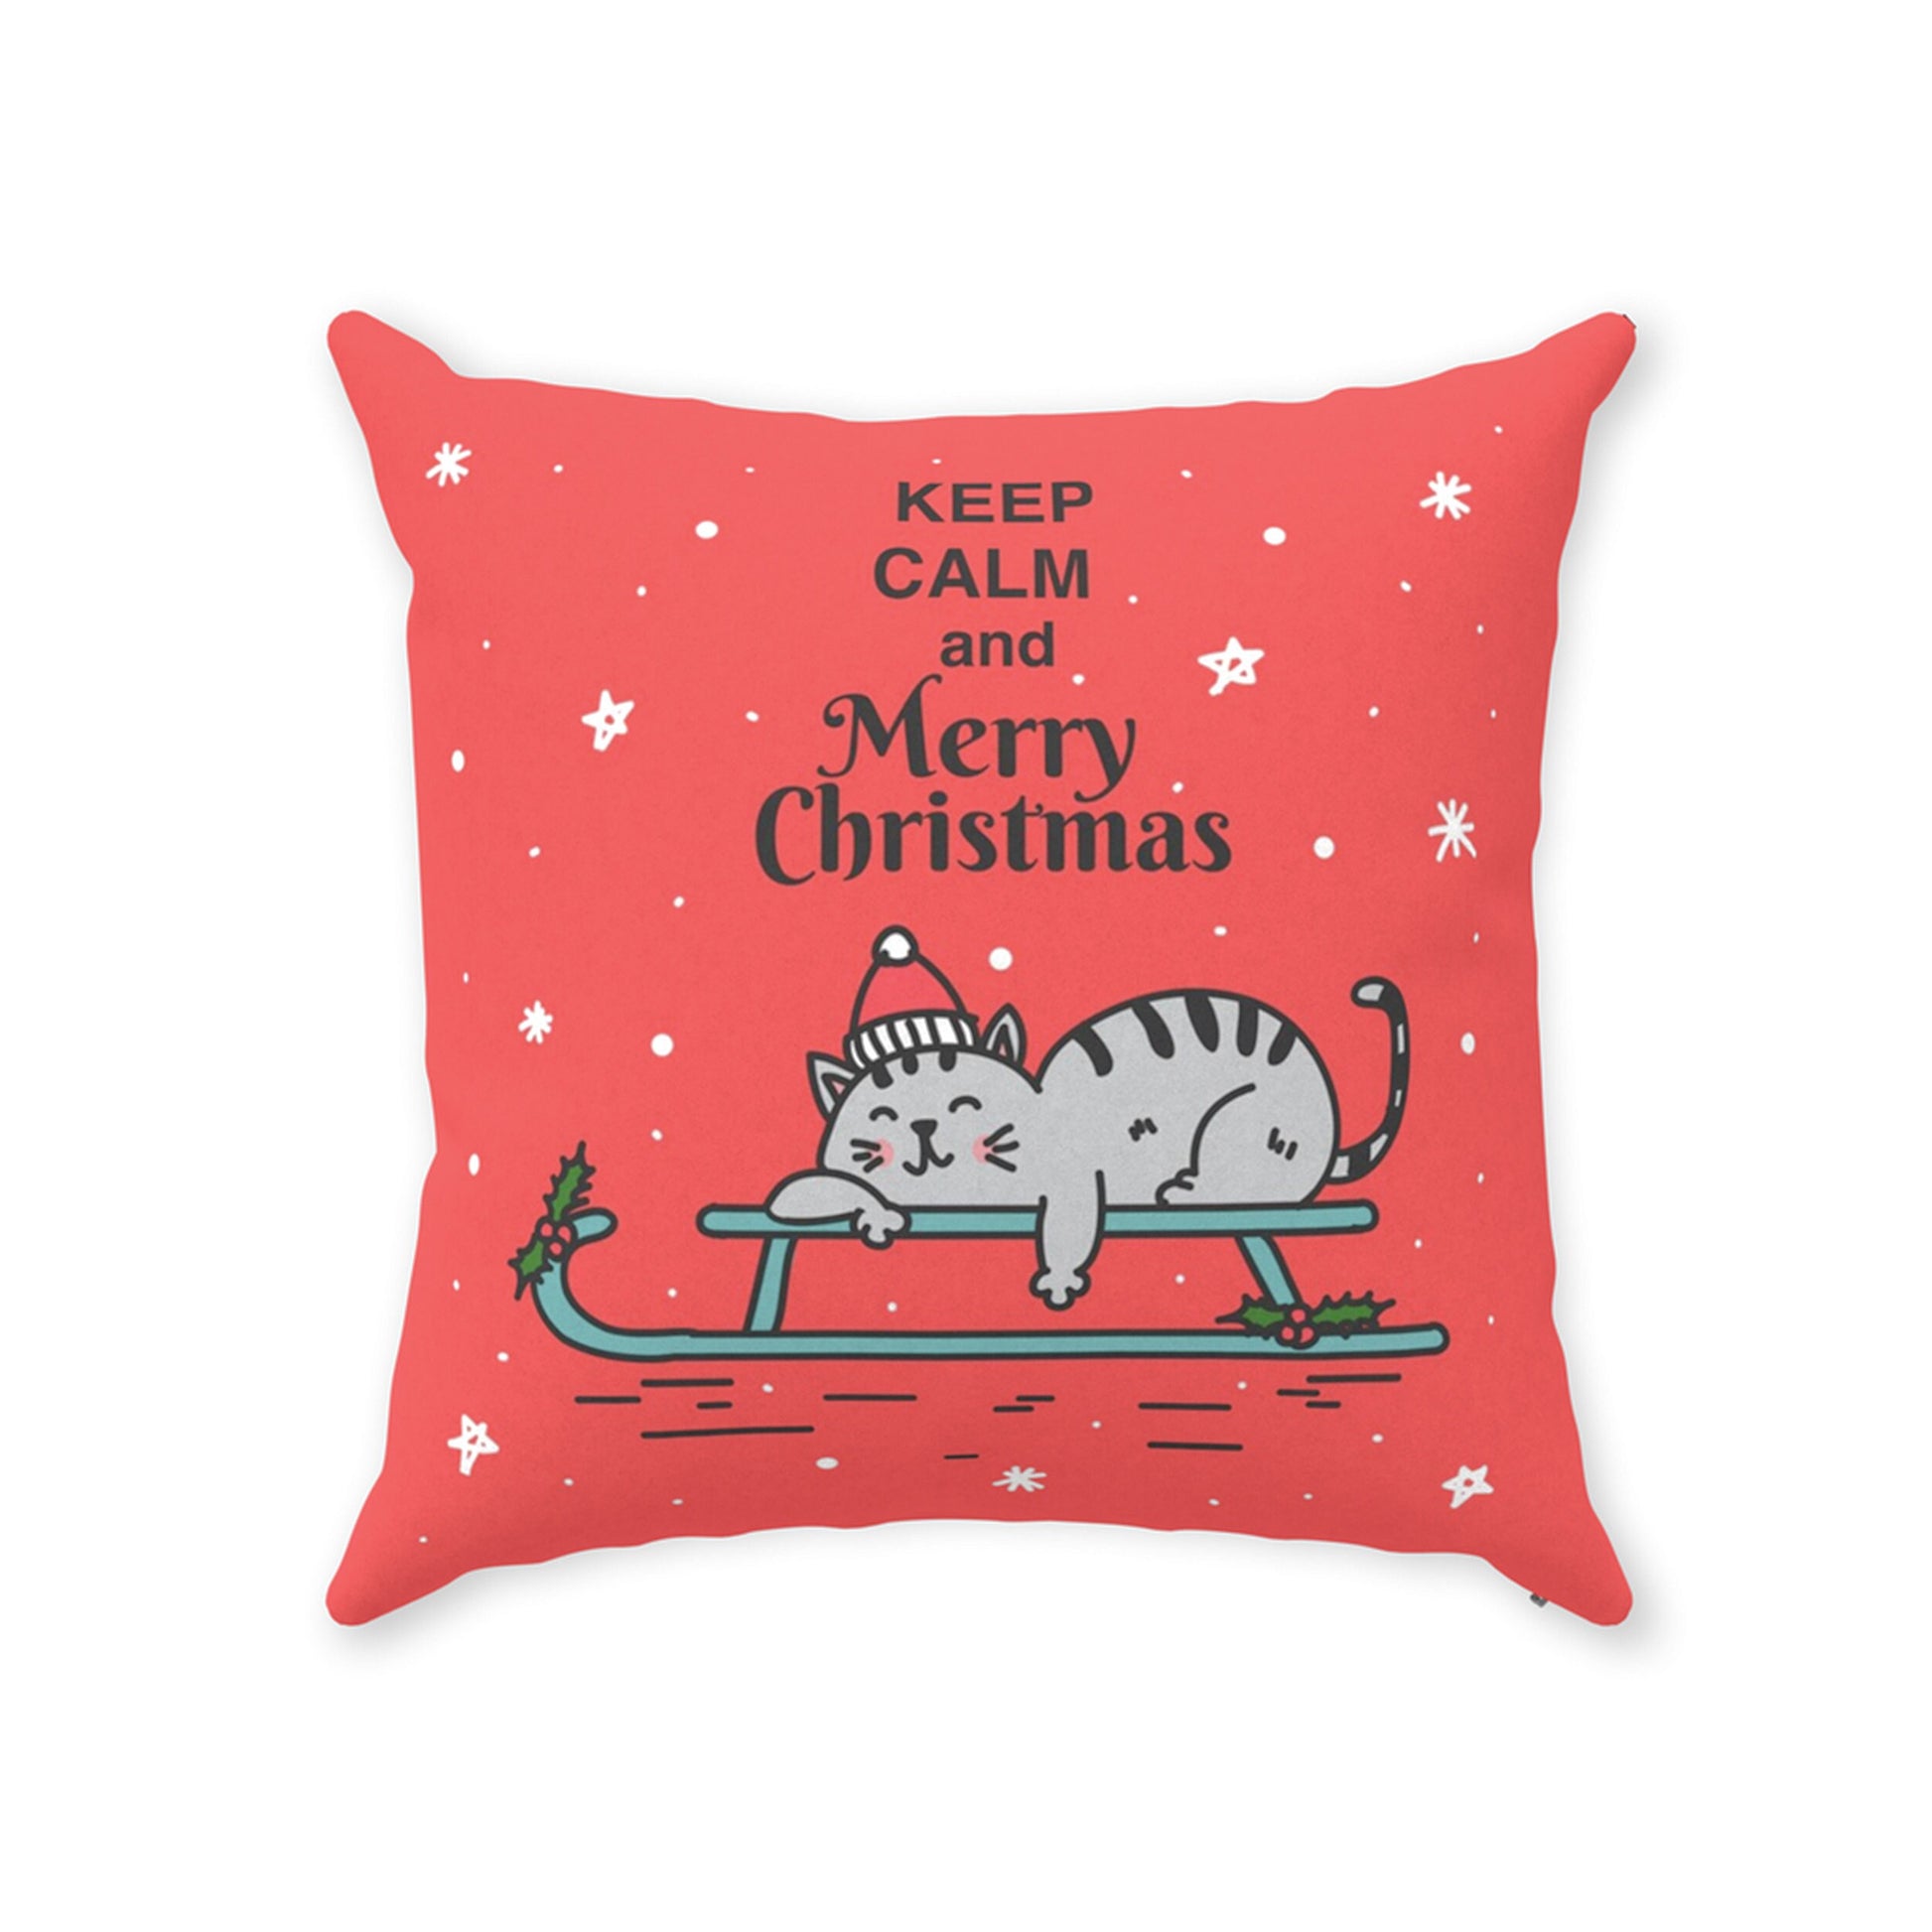 Keep Calm & Merry Christmas Red pillow decorative holiday pillows xmas pillows cute cat pillow red pillows keep calm pillow cats lovers